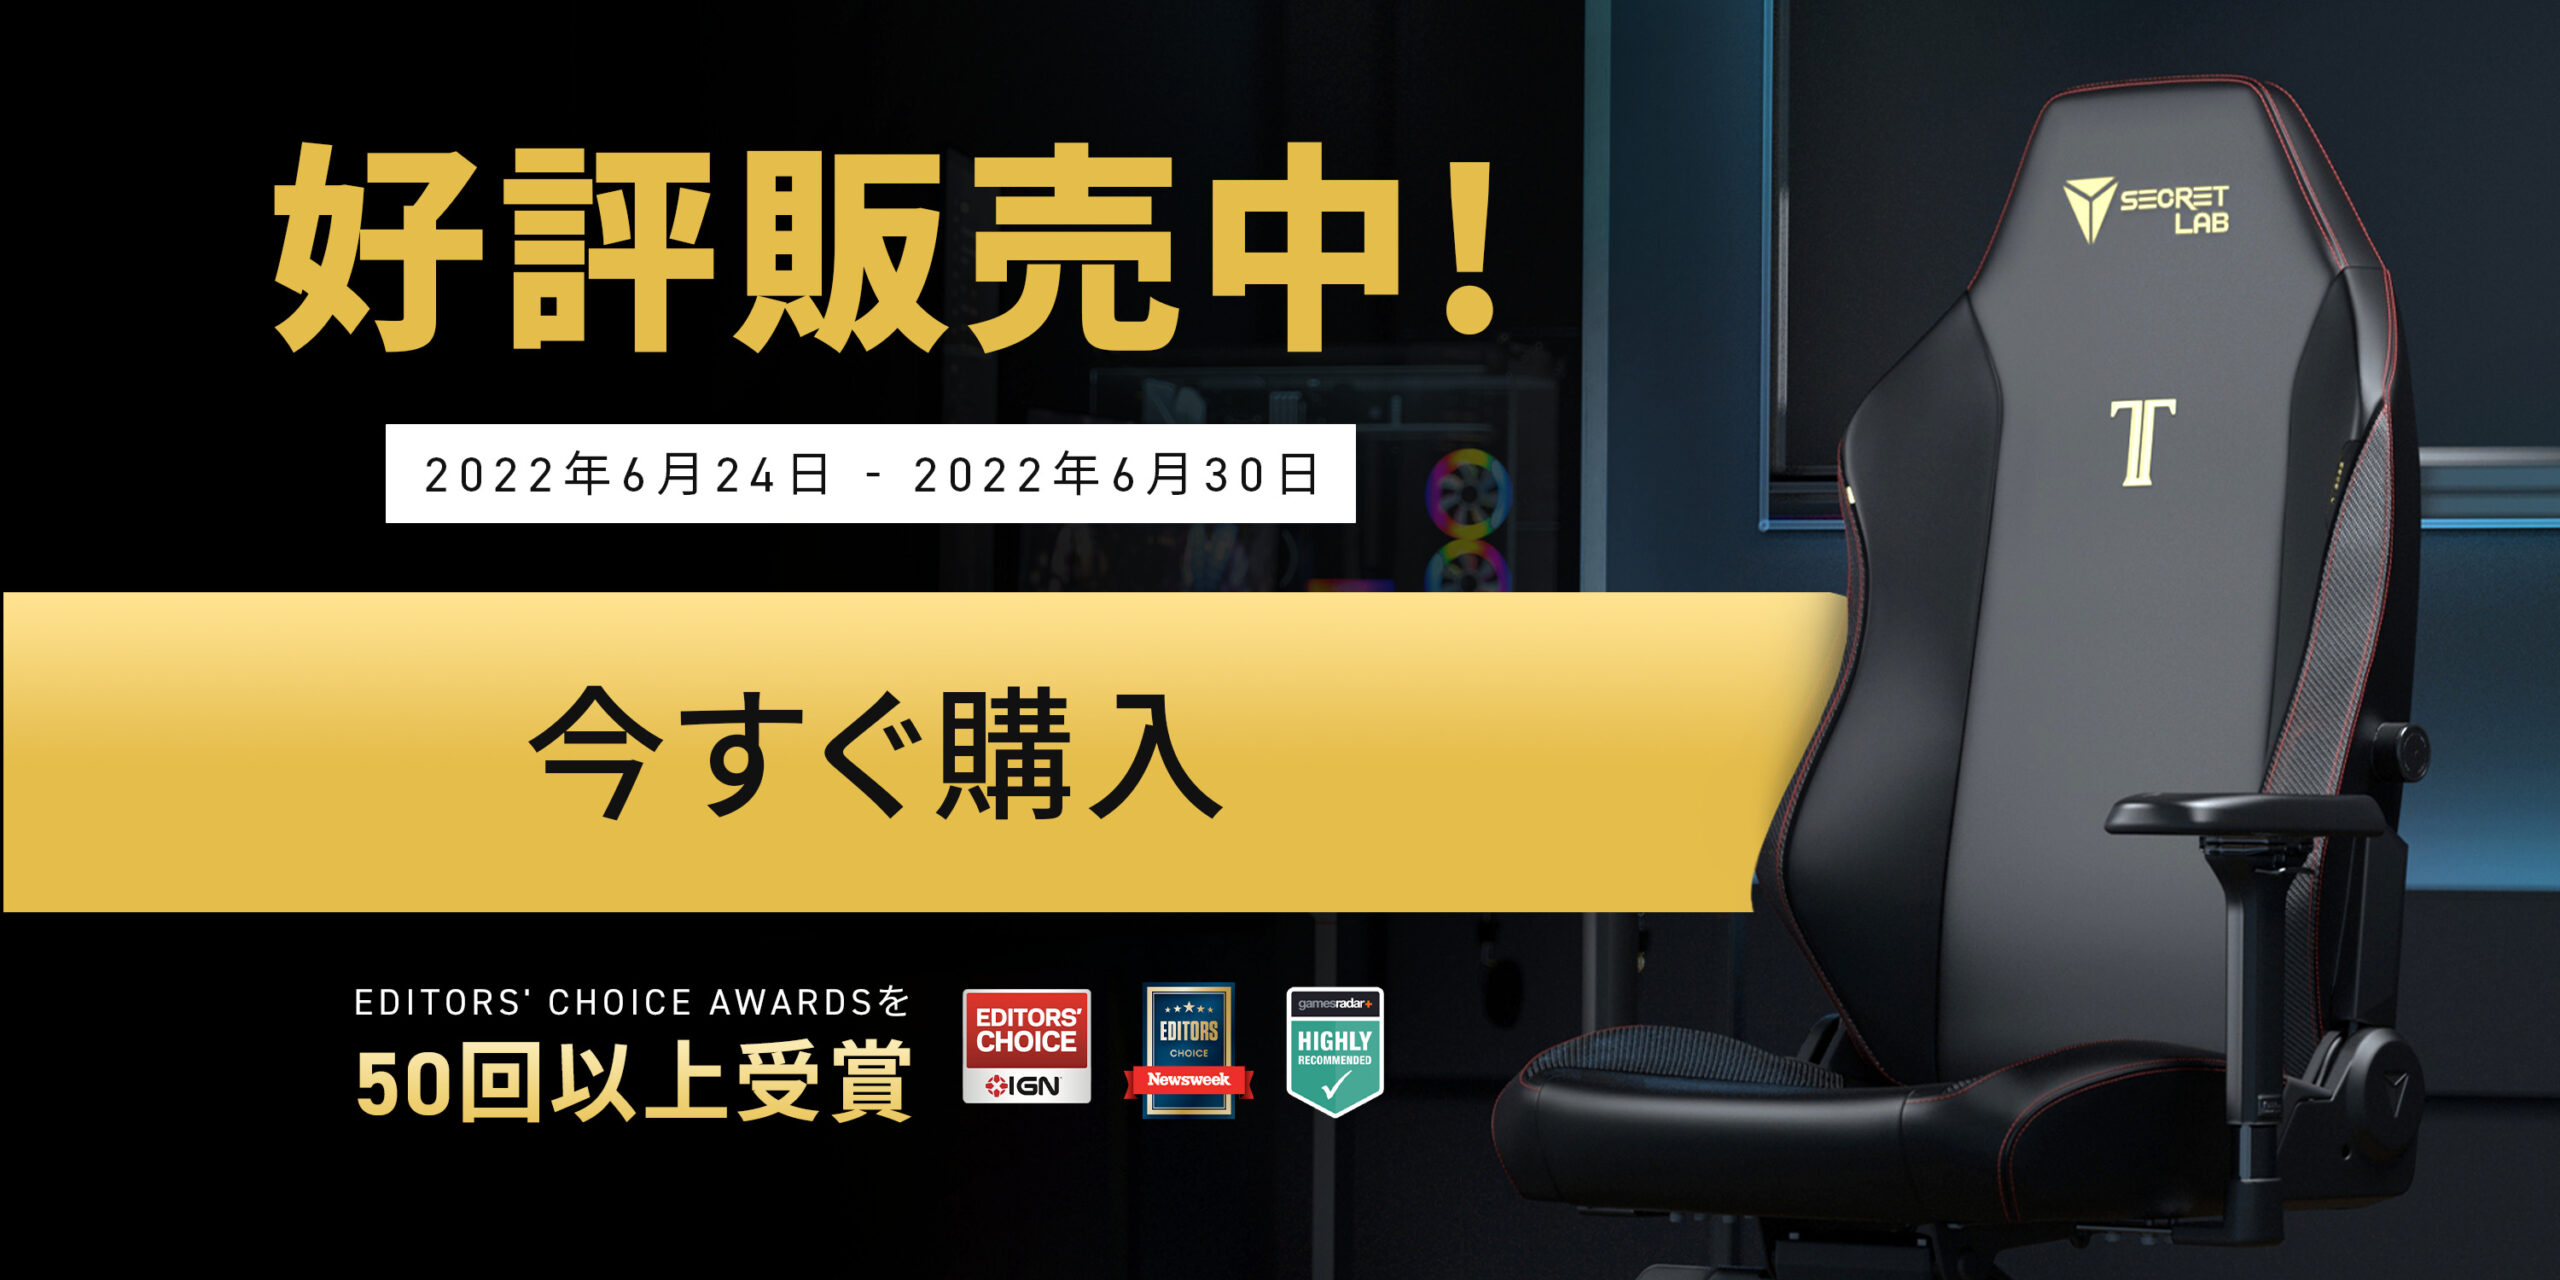 Secretlab TITAN Evo 2022シリーズを3,500円オフで購入できる